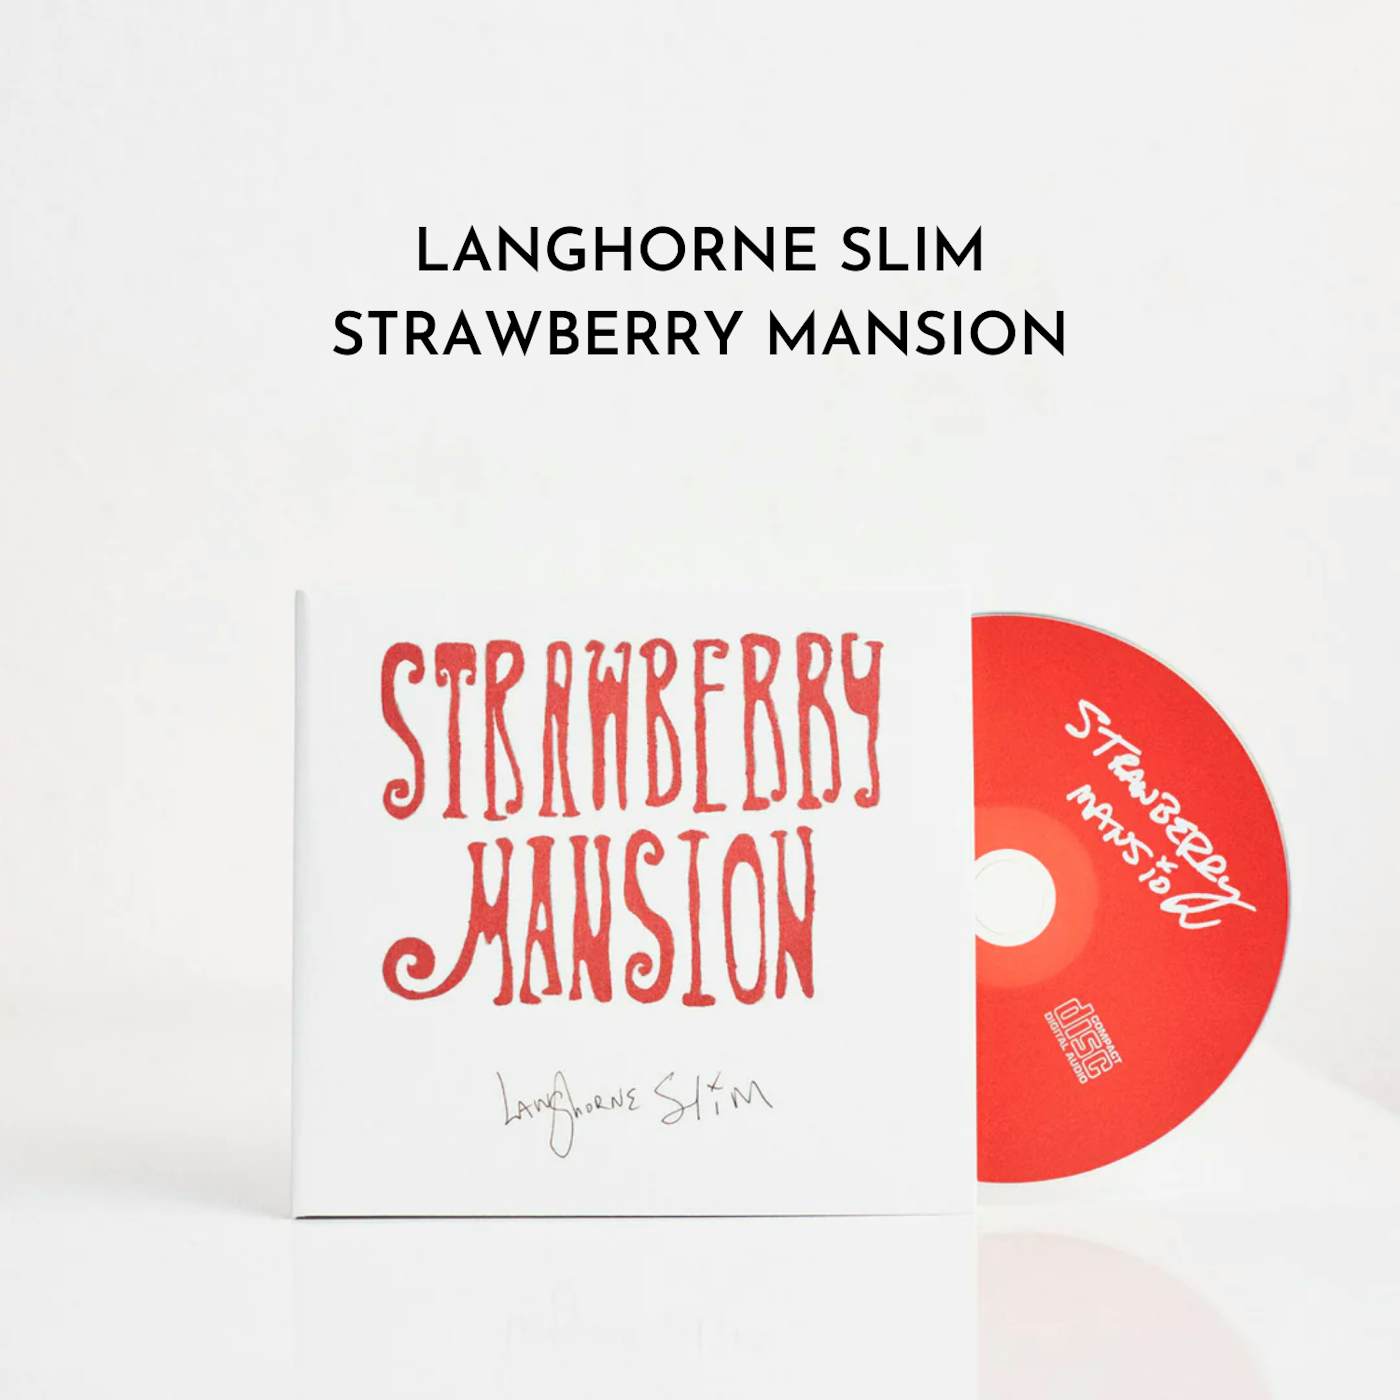 Langhorne Slim Strawberry Mansion (CD)